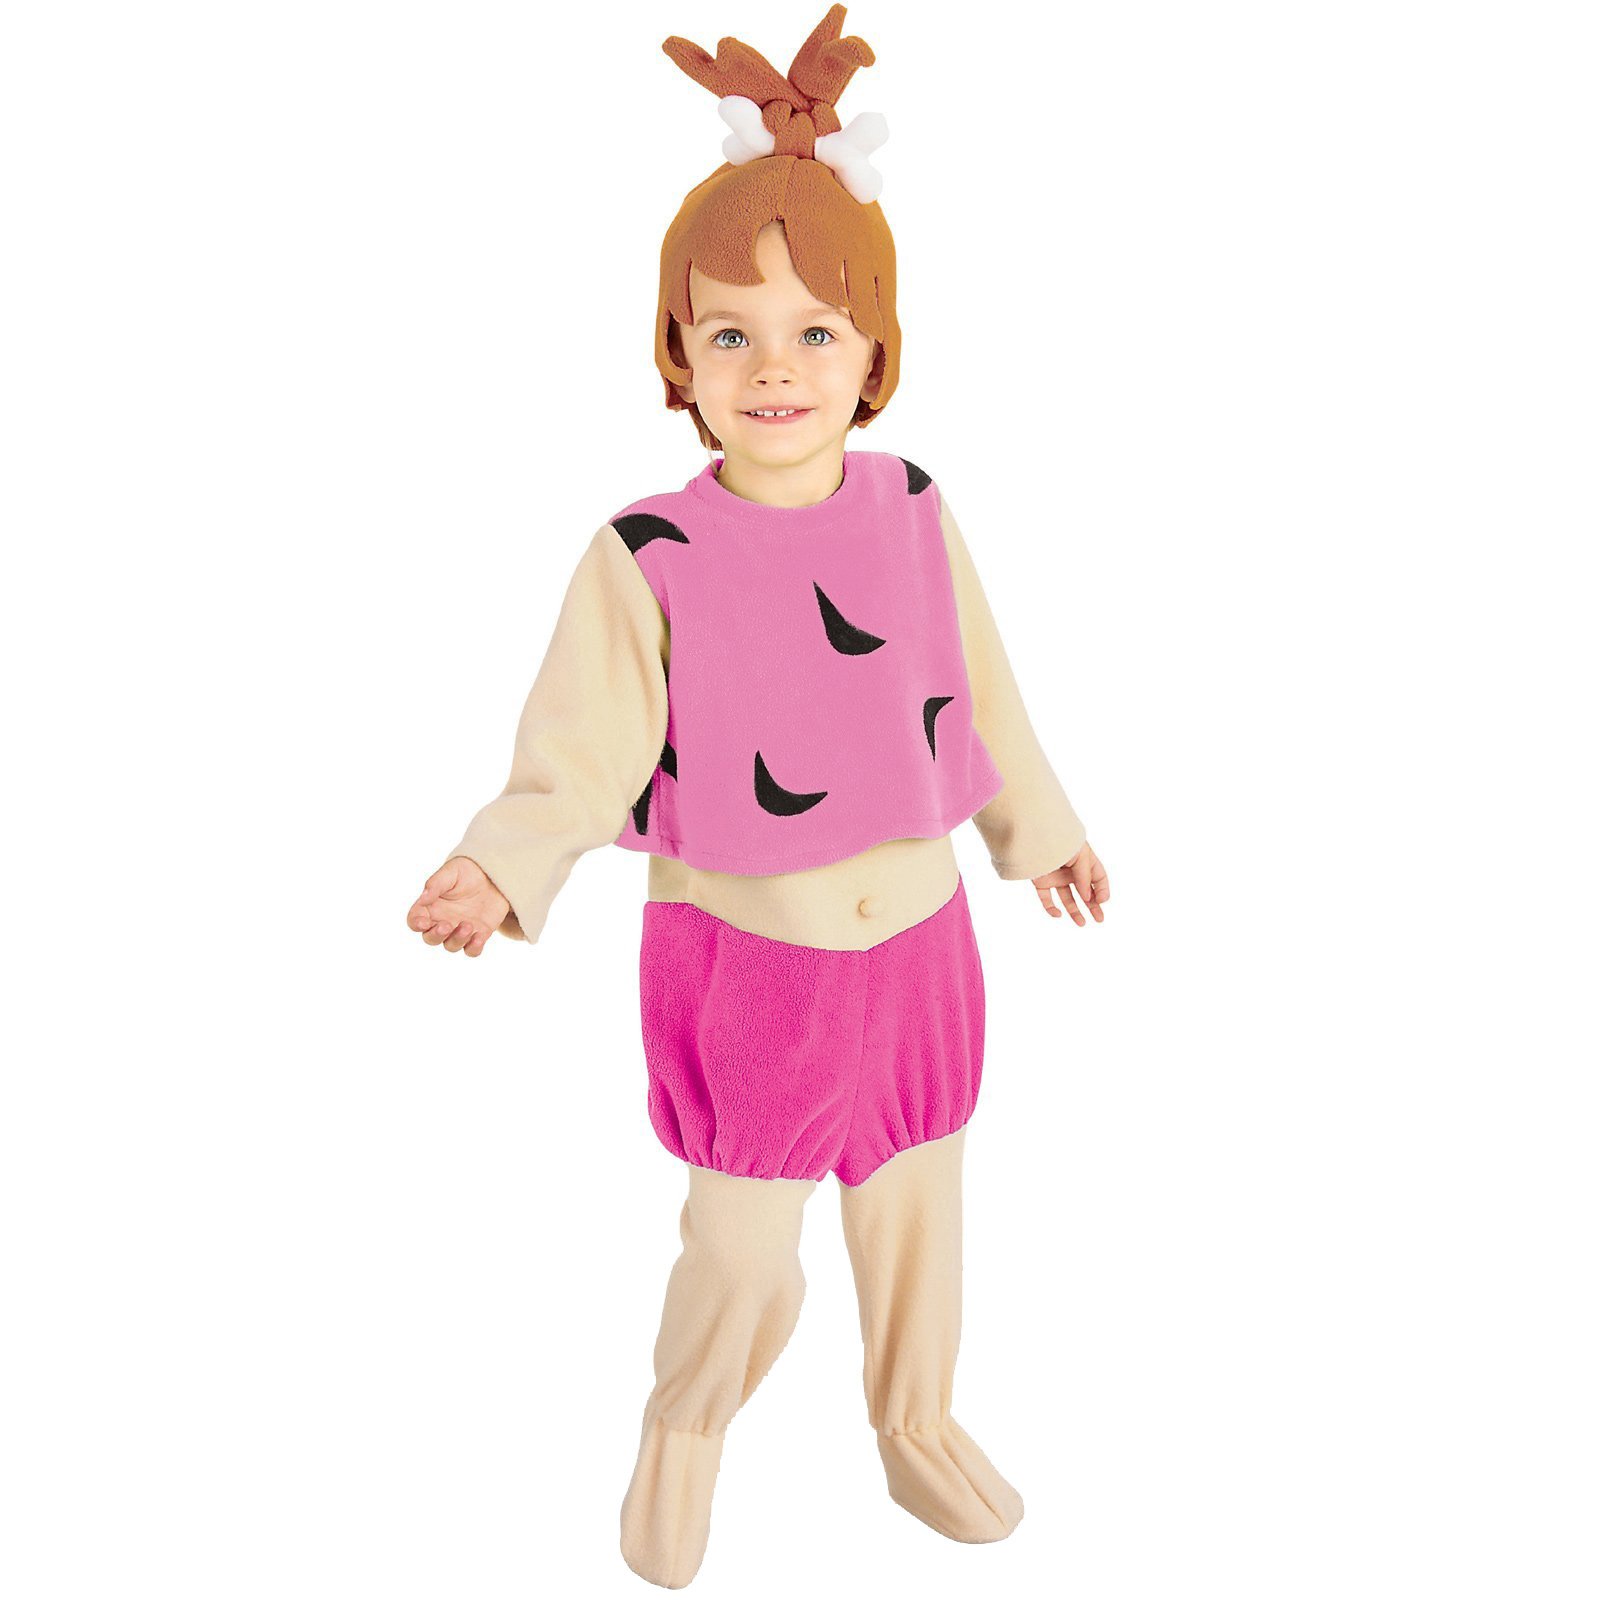 The Flintstones Pebbles Child Costume